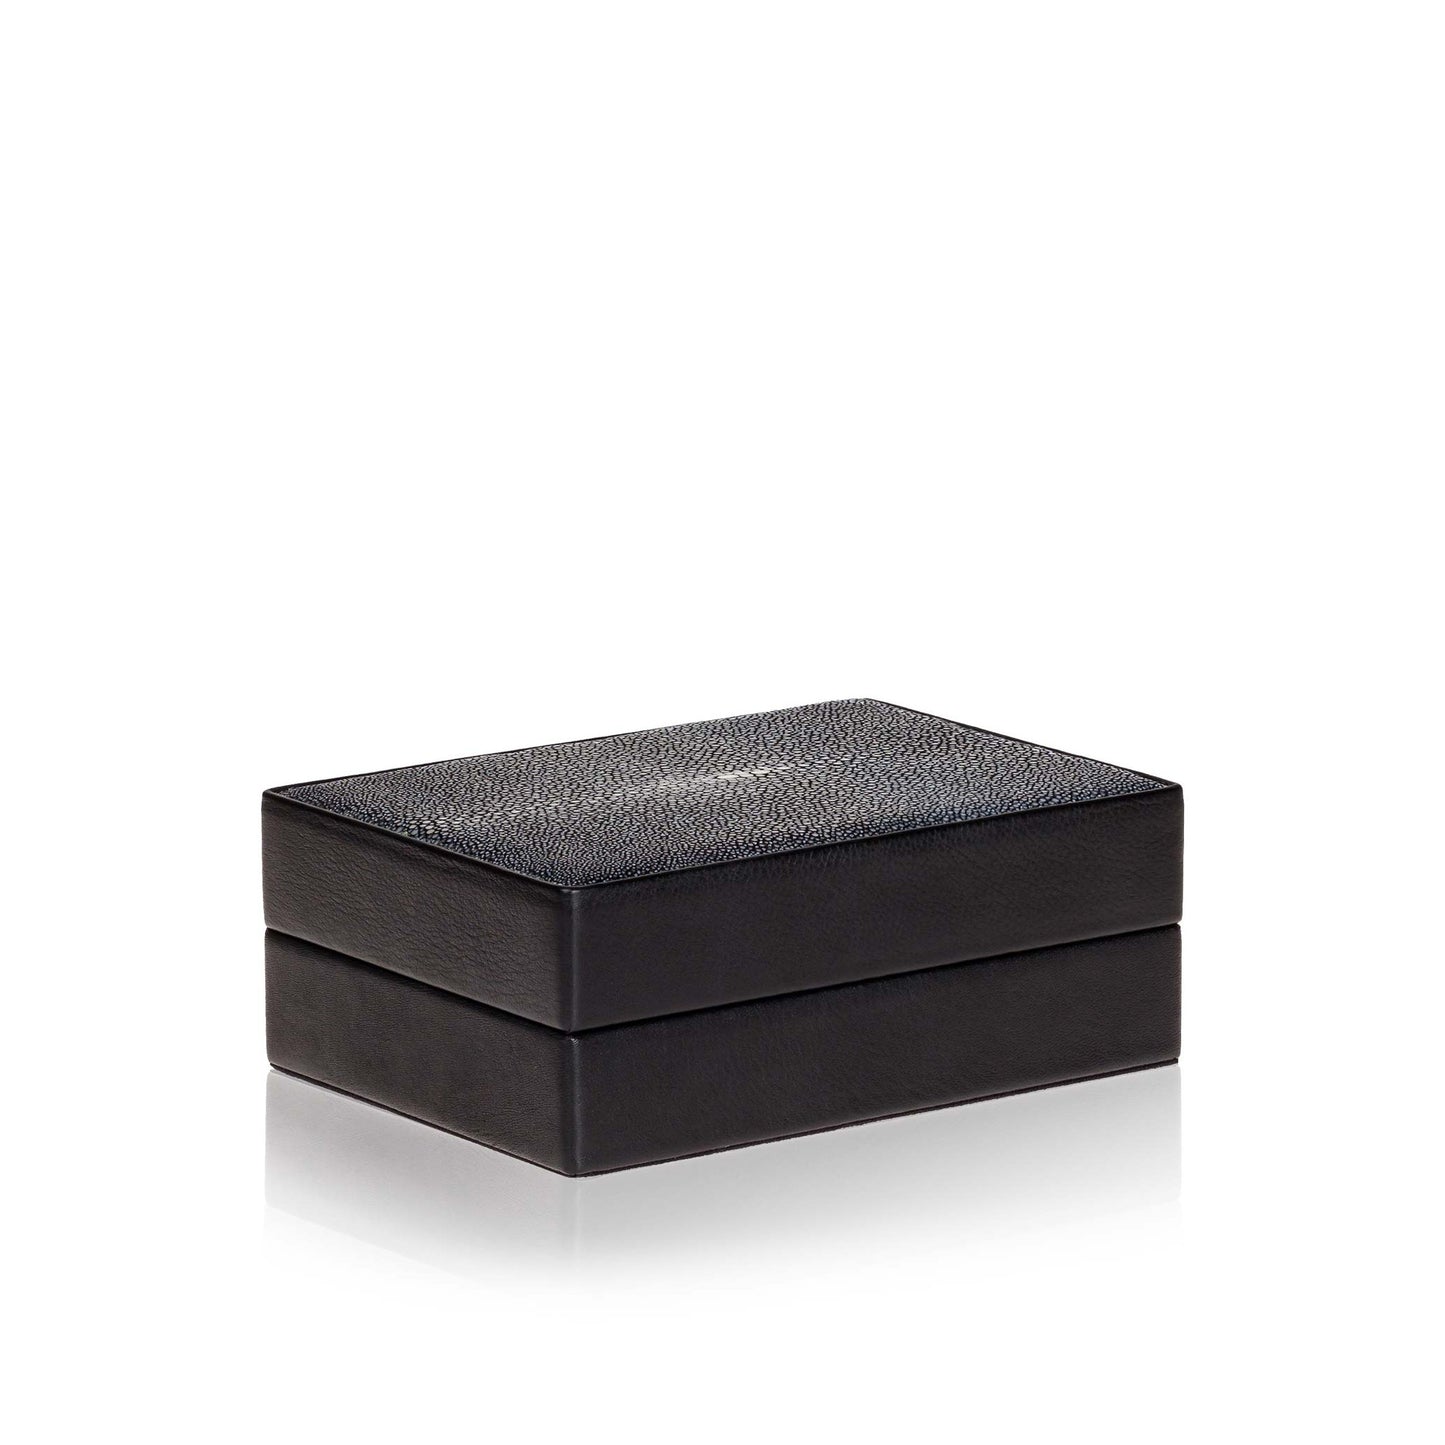 Small Box in Black Stingray Leather